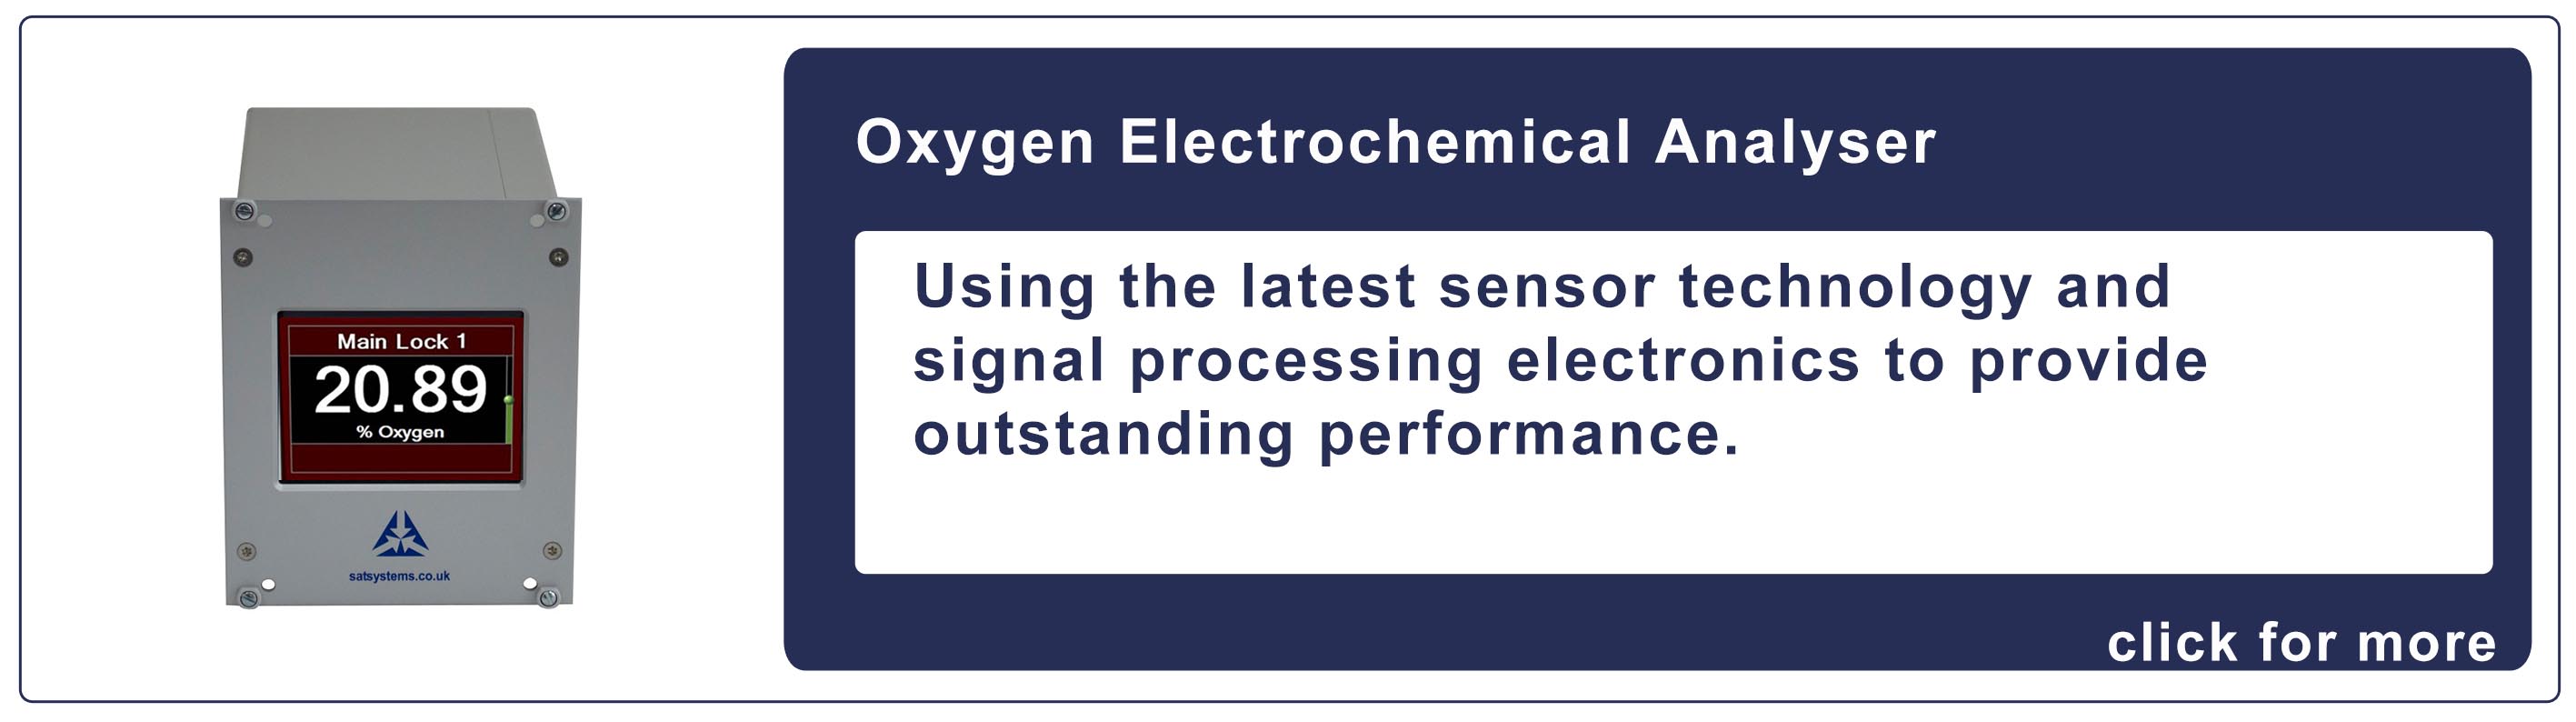 Oxygen-Electrochemical-Analyser